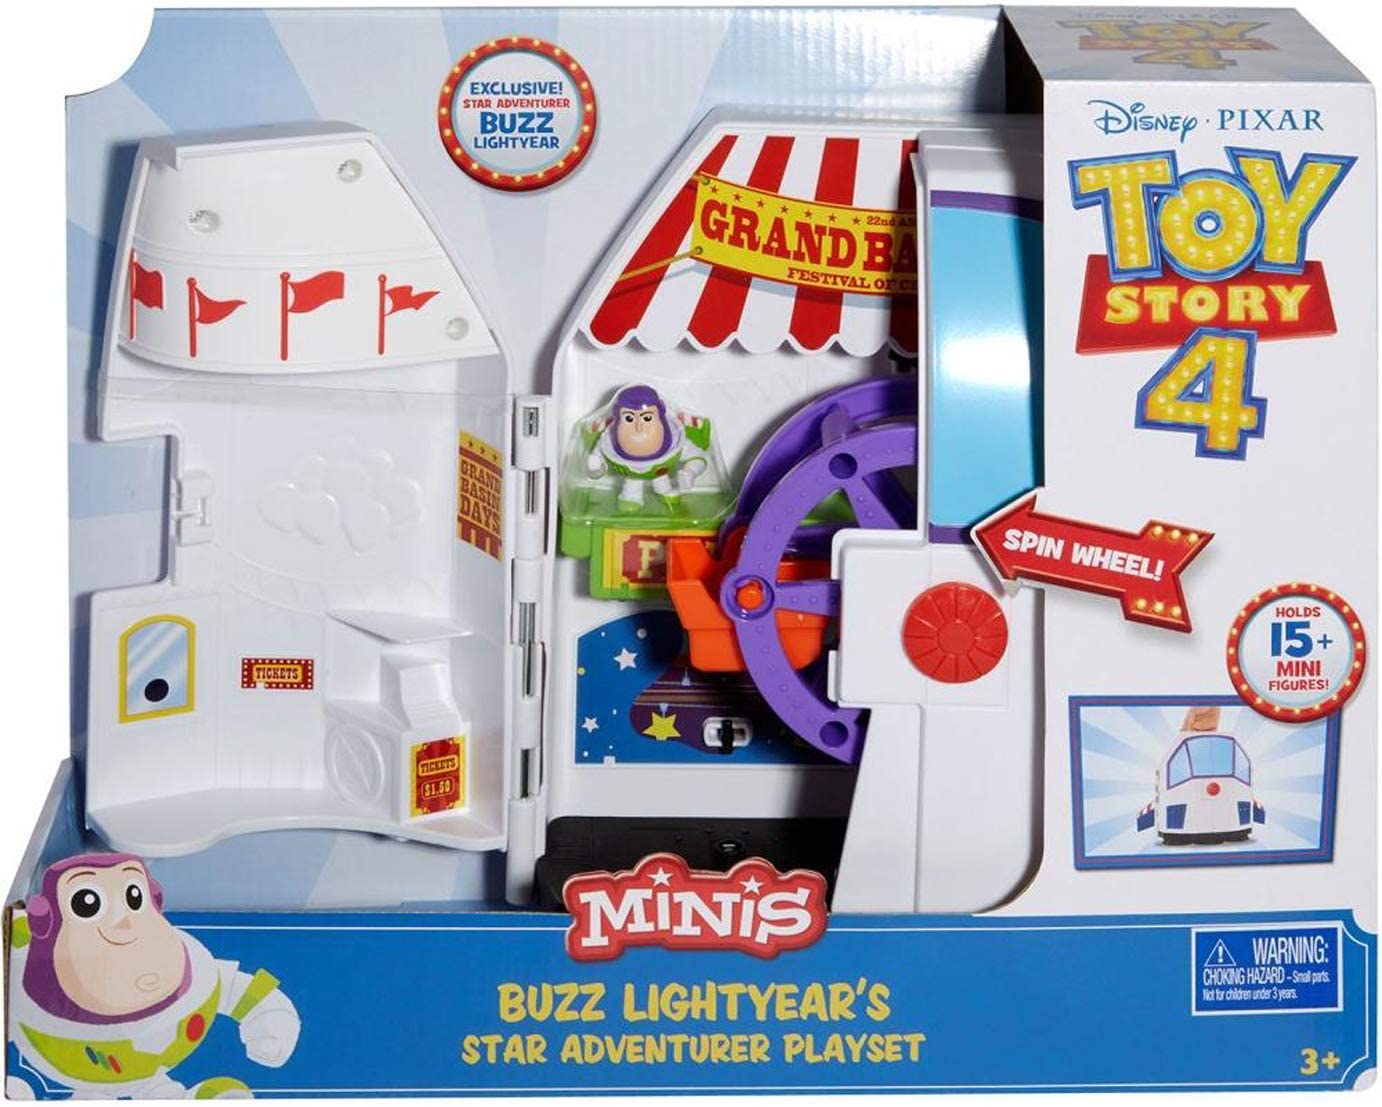 Toy Story Aged 3+ Disney Pixar Minis Buzz Lightyear's Star Adventurer Playset